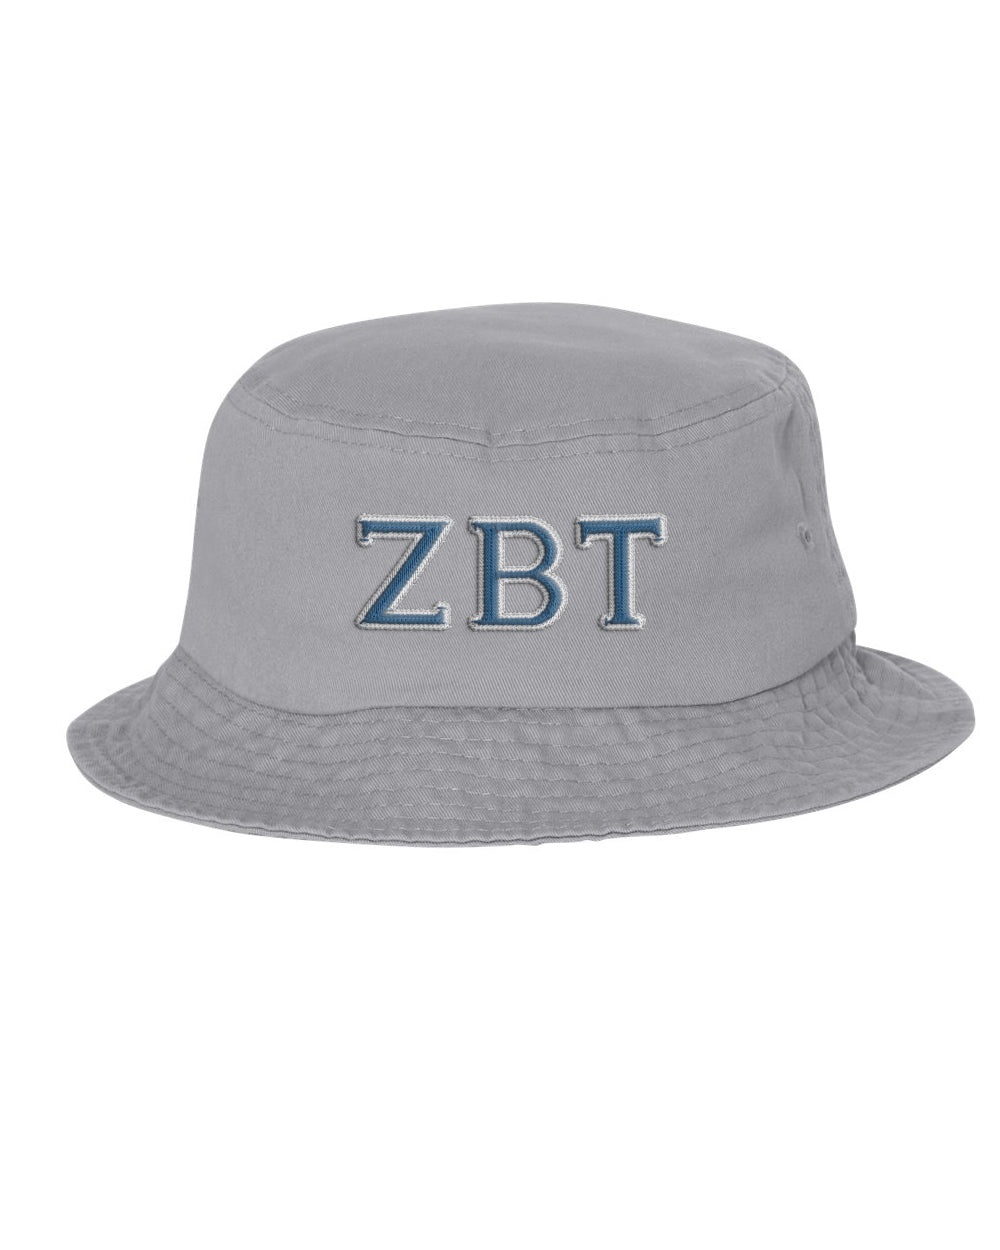 Zeta Beta Tau Embroidered Bucket Hat